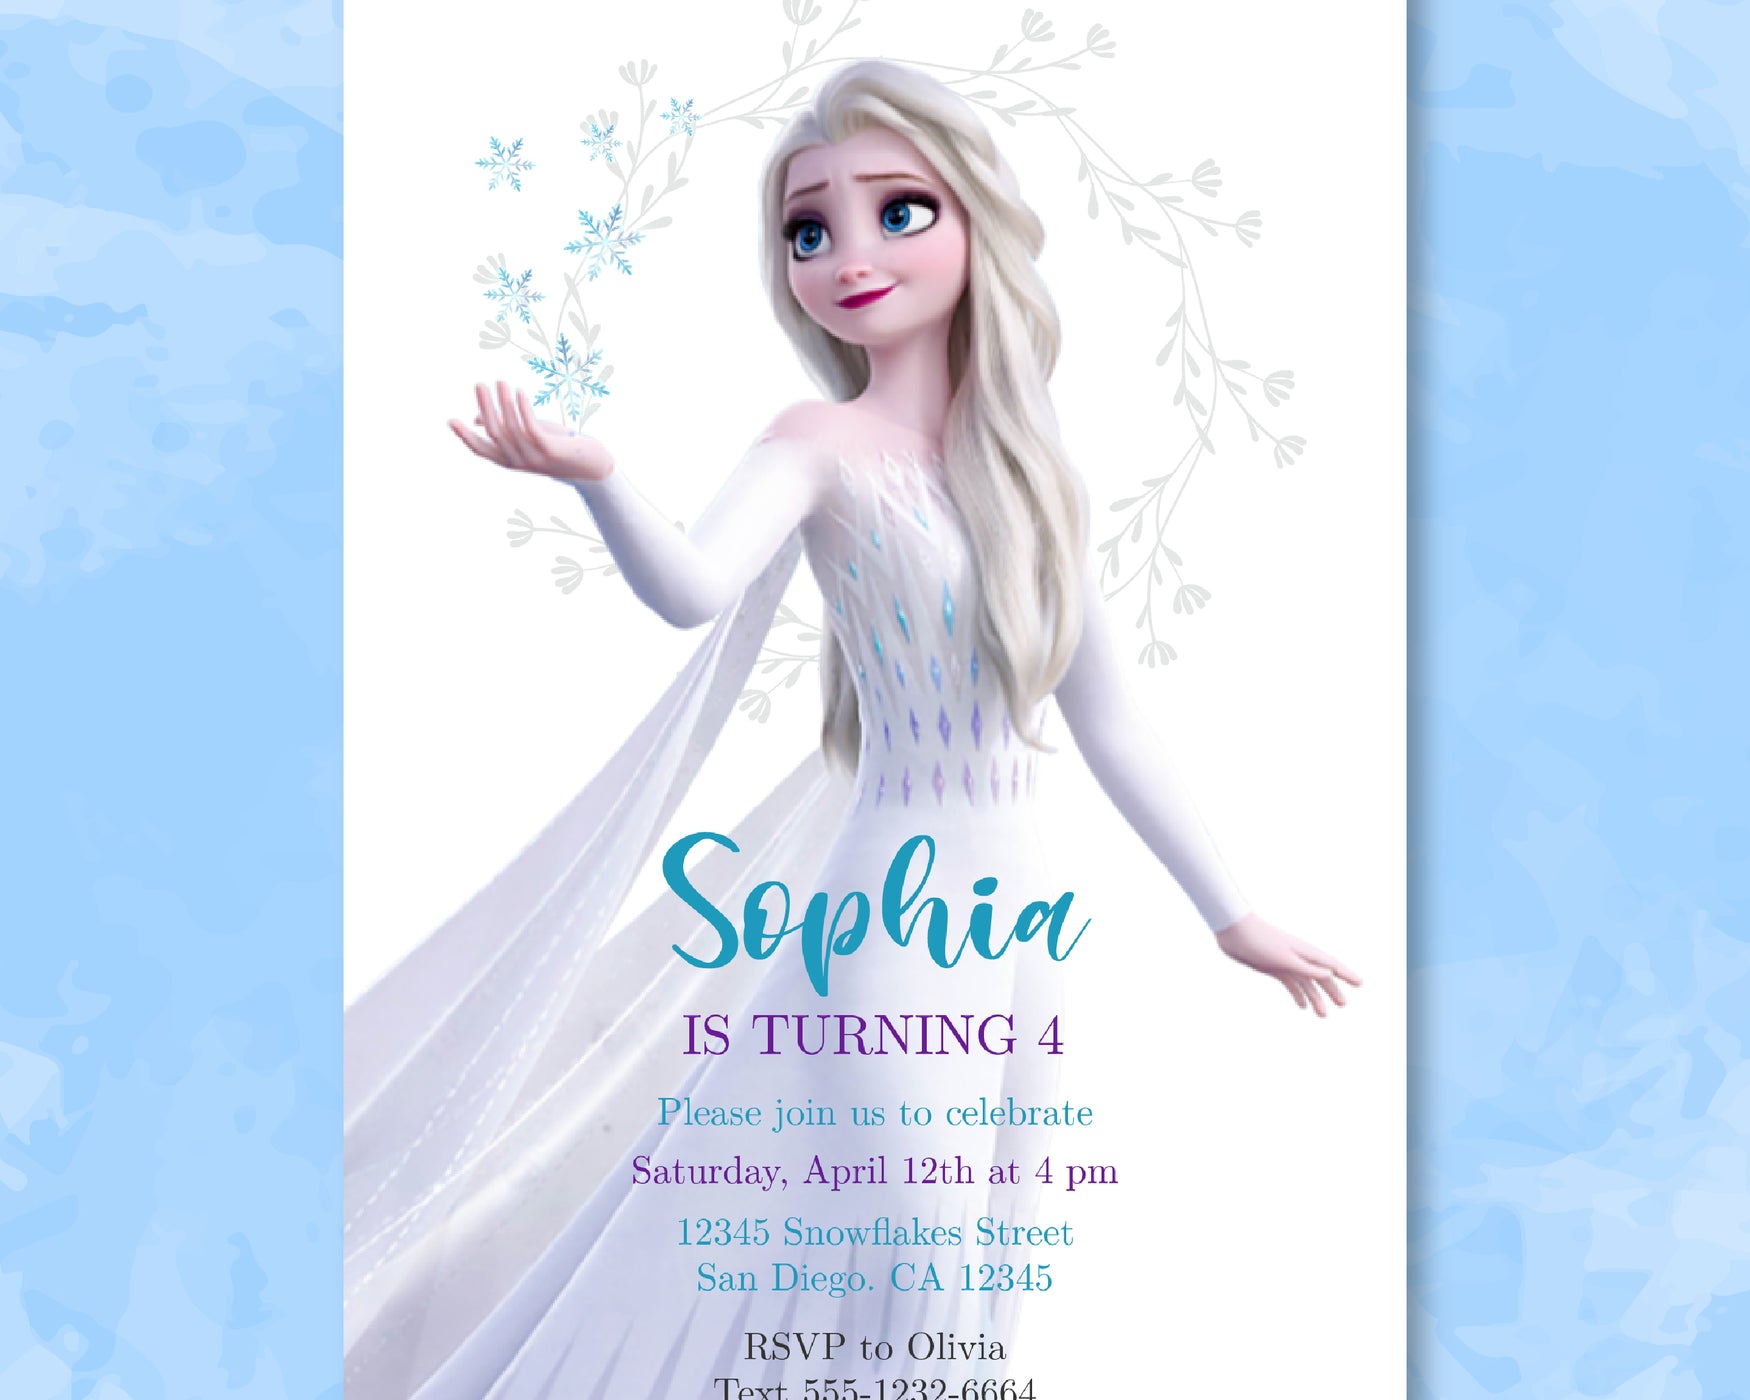 Frozen Birthday Invitation Template | Editable | Printable | Instant Download